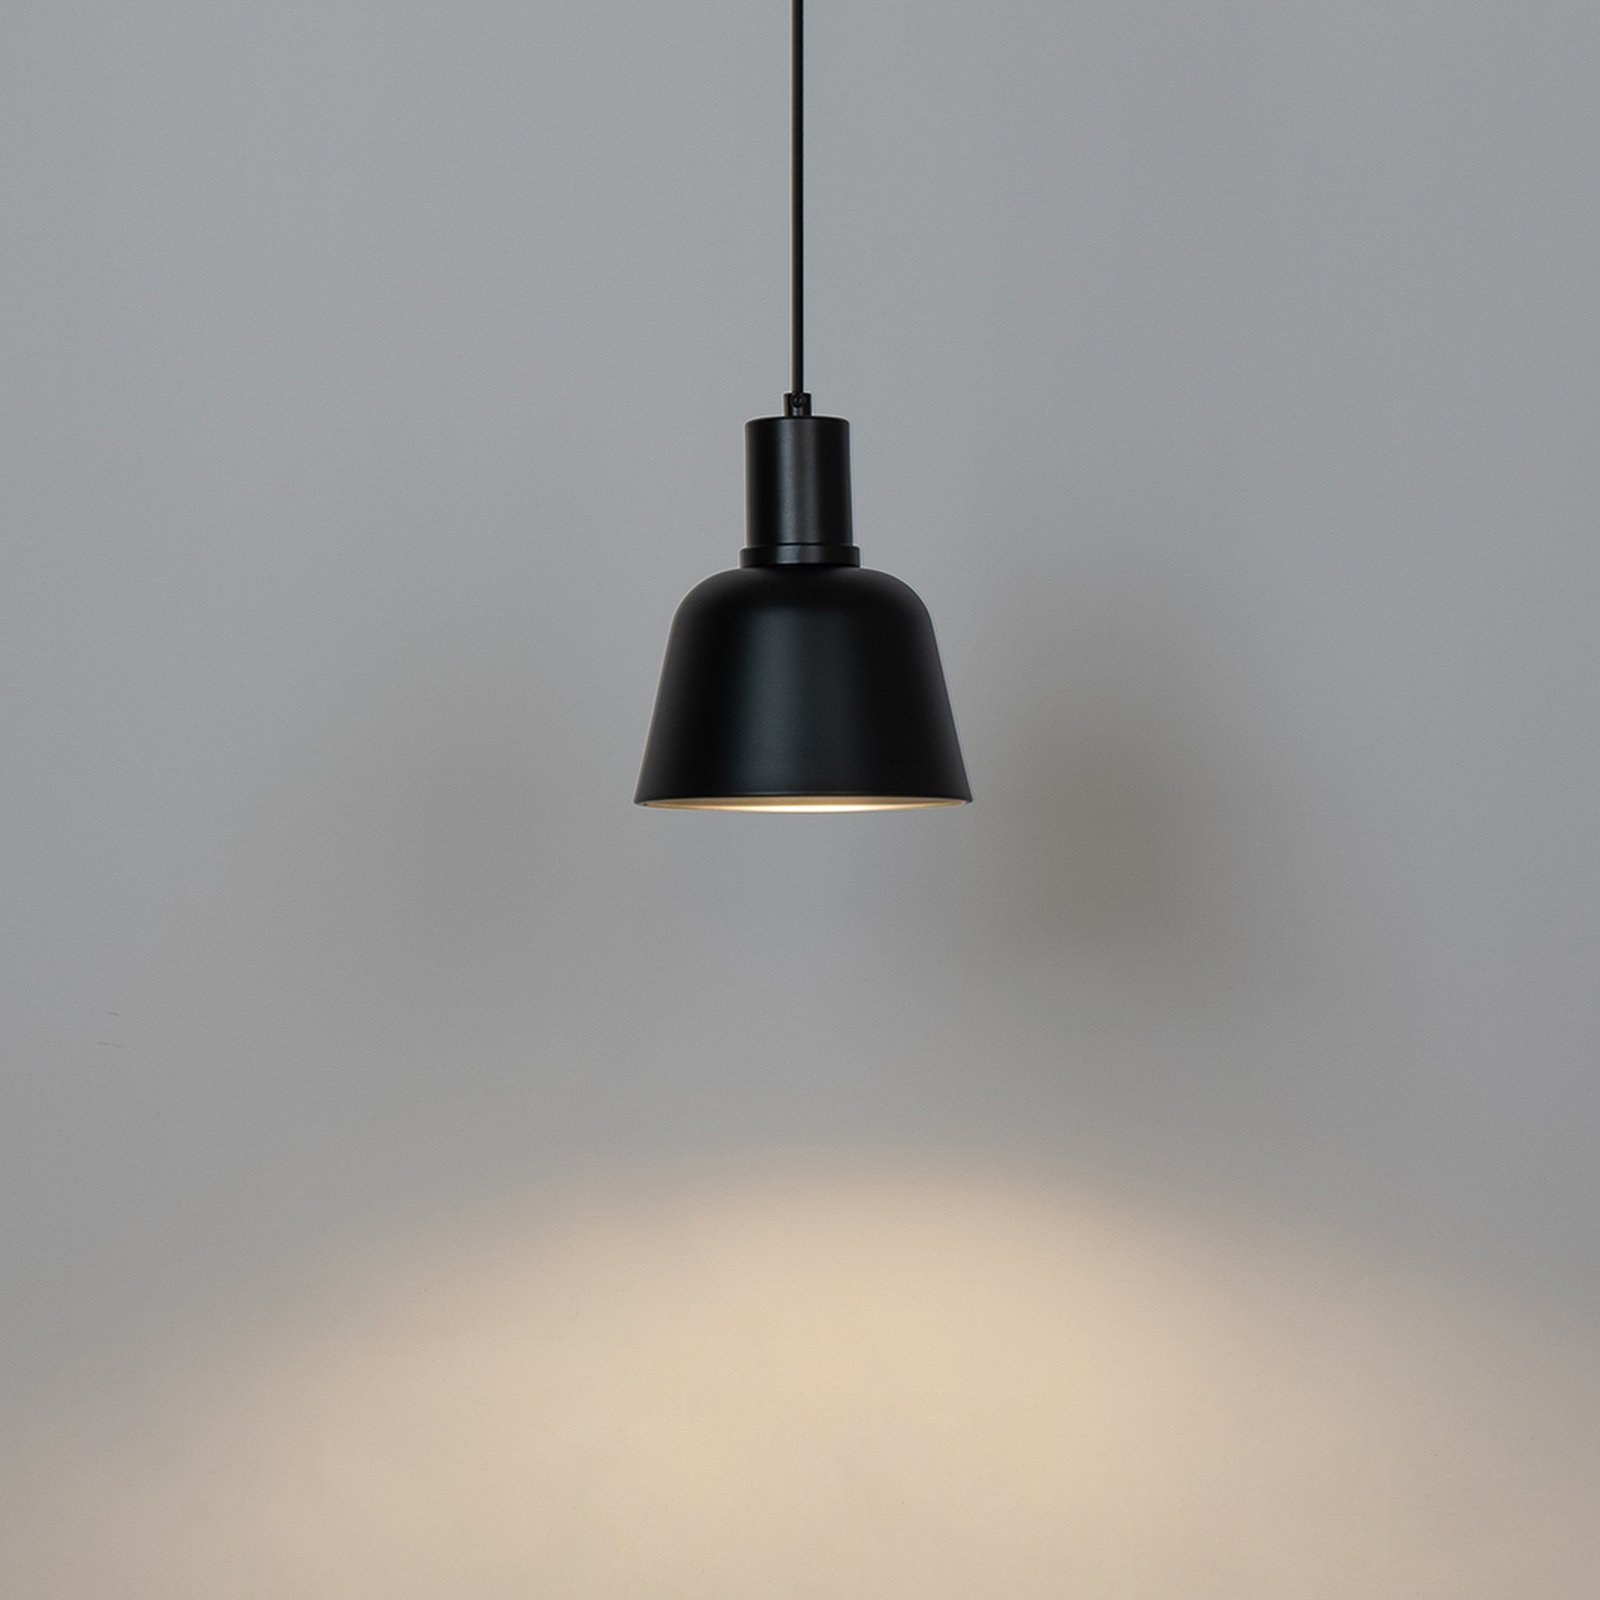 Lucande Servan hanglamp, zwart, 1-lamp